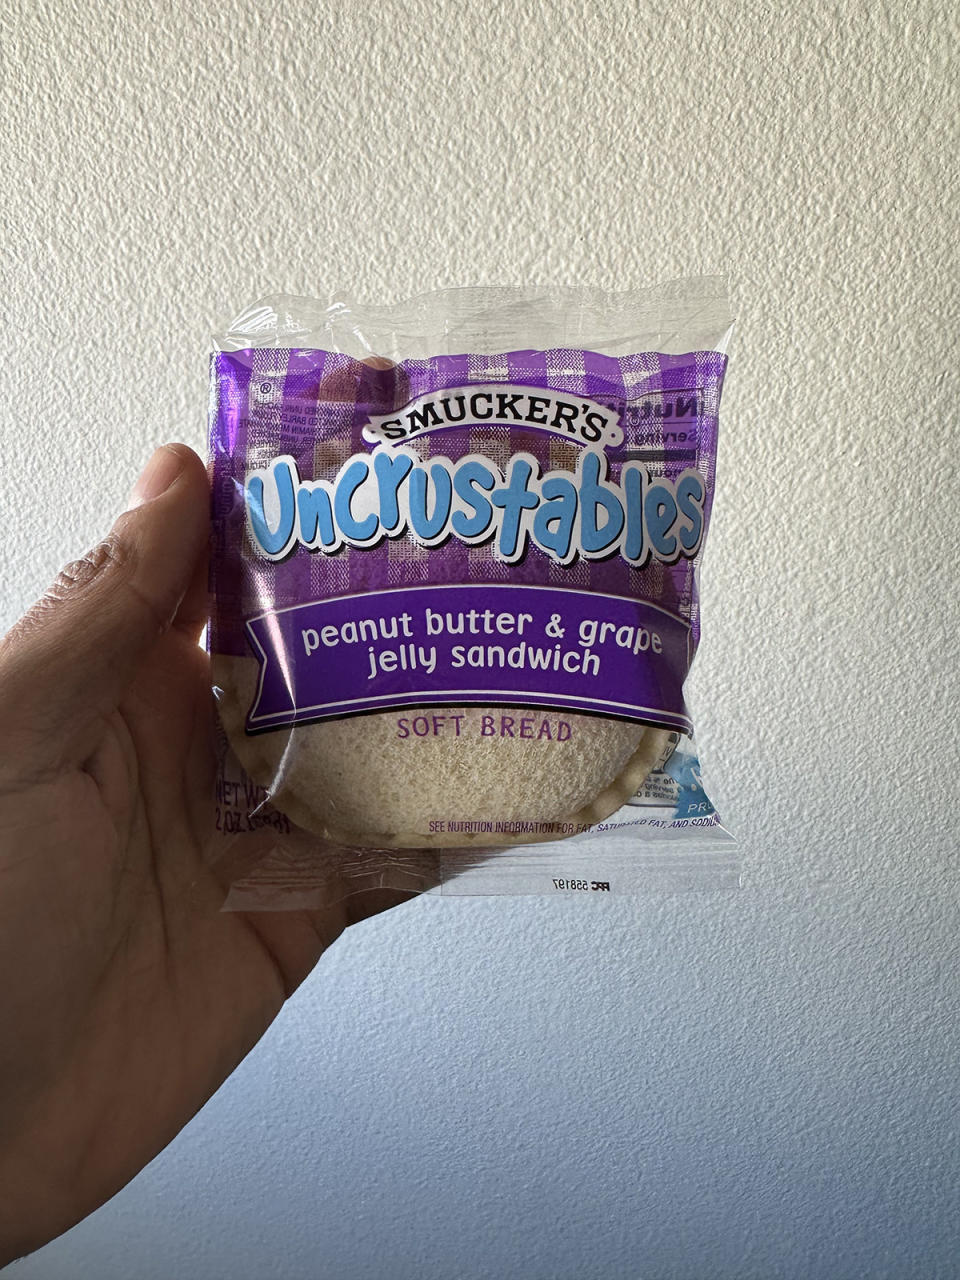 A hand holding a Smucker's Uncrustables Peanut Butter & Grape Jelly Sandwich bag